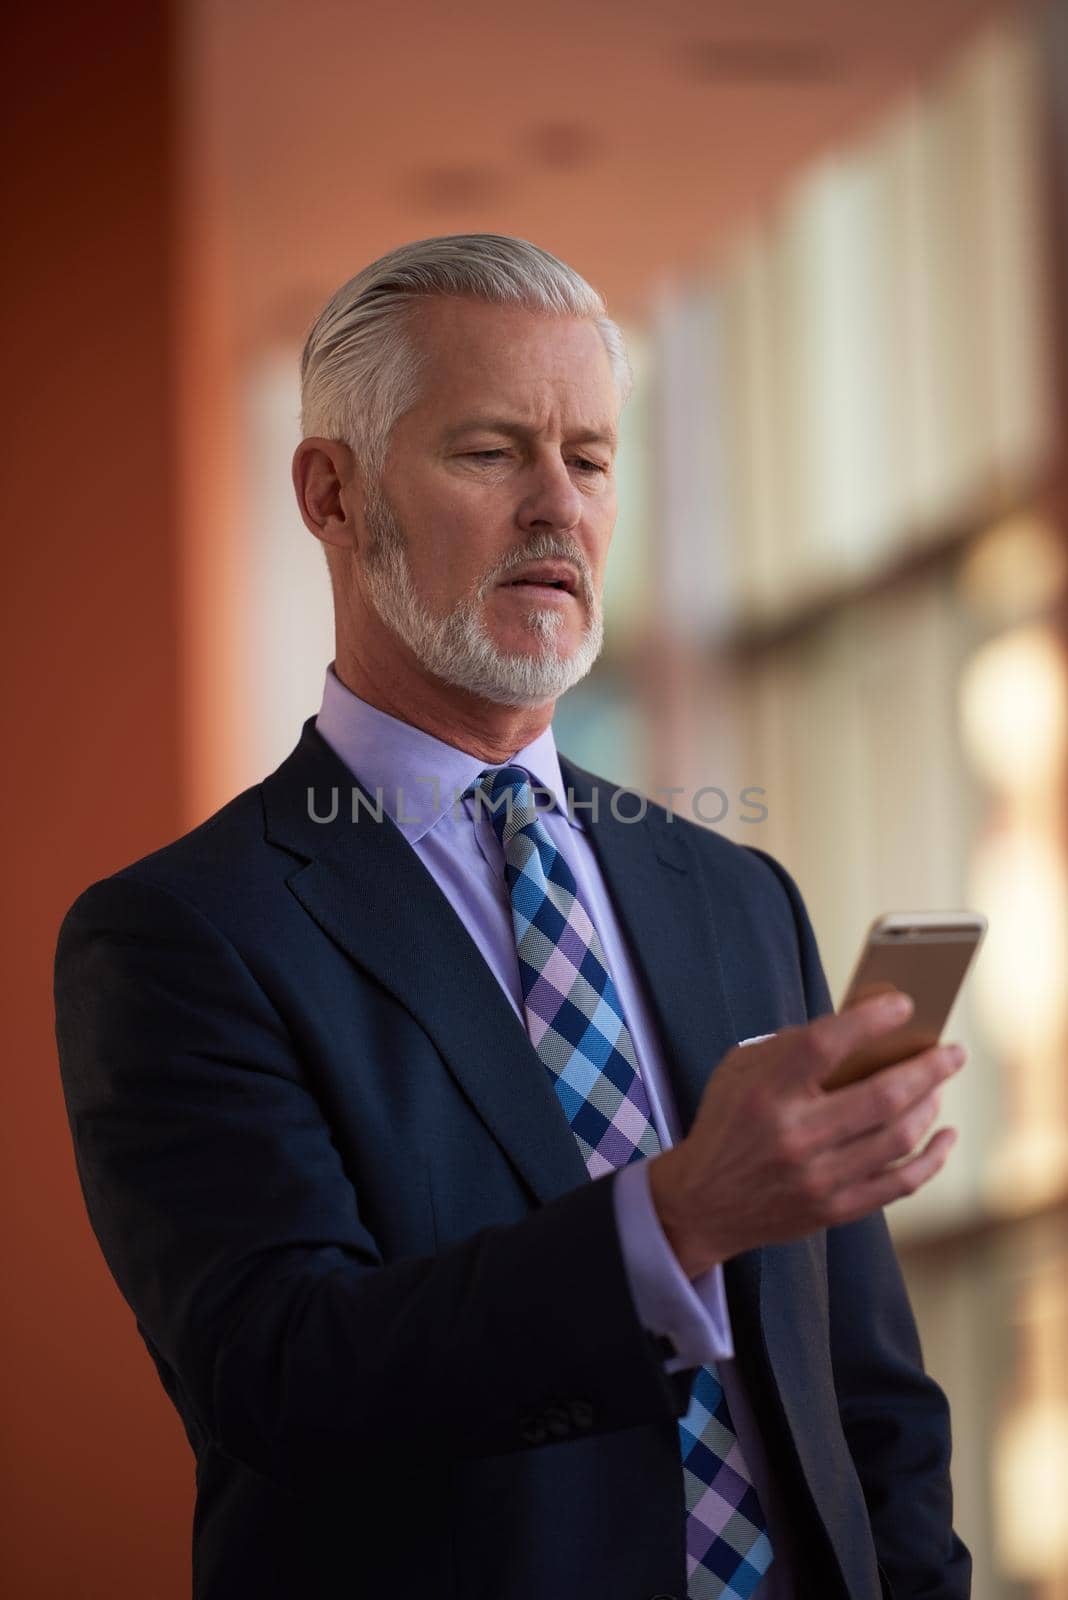 senior business man talk on mobile phone  at modern bright office interior